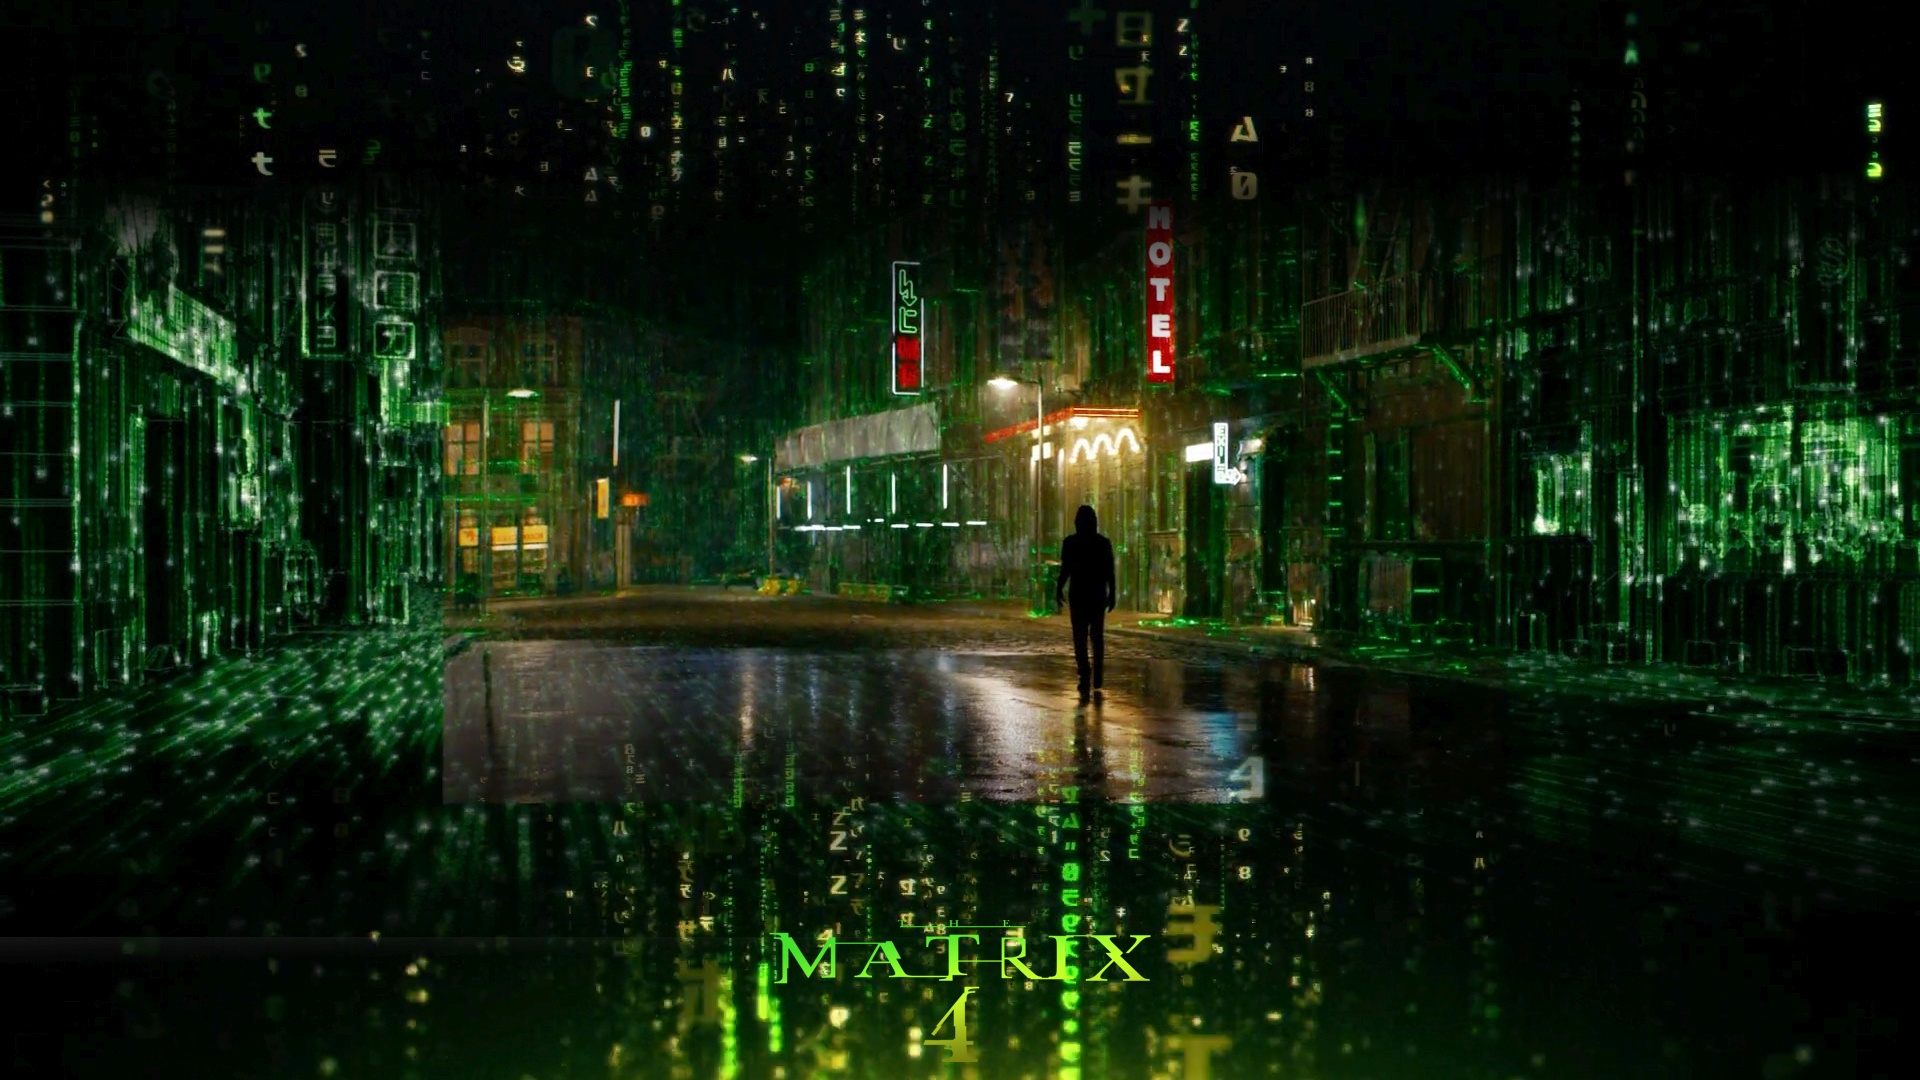 The Matrix 4 desktop background